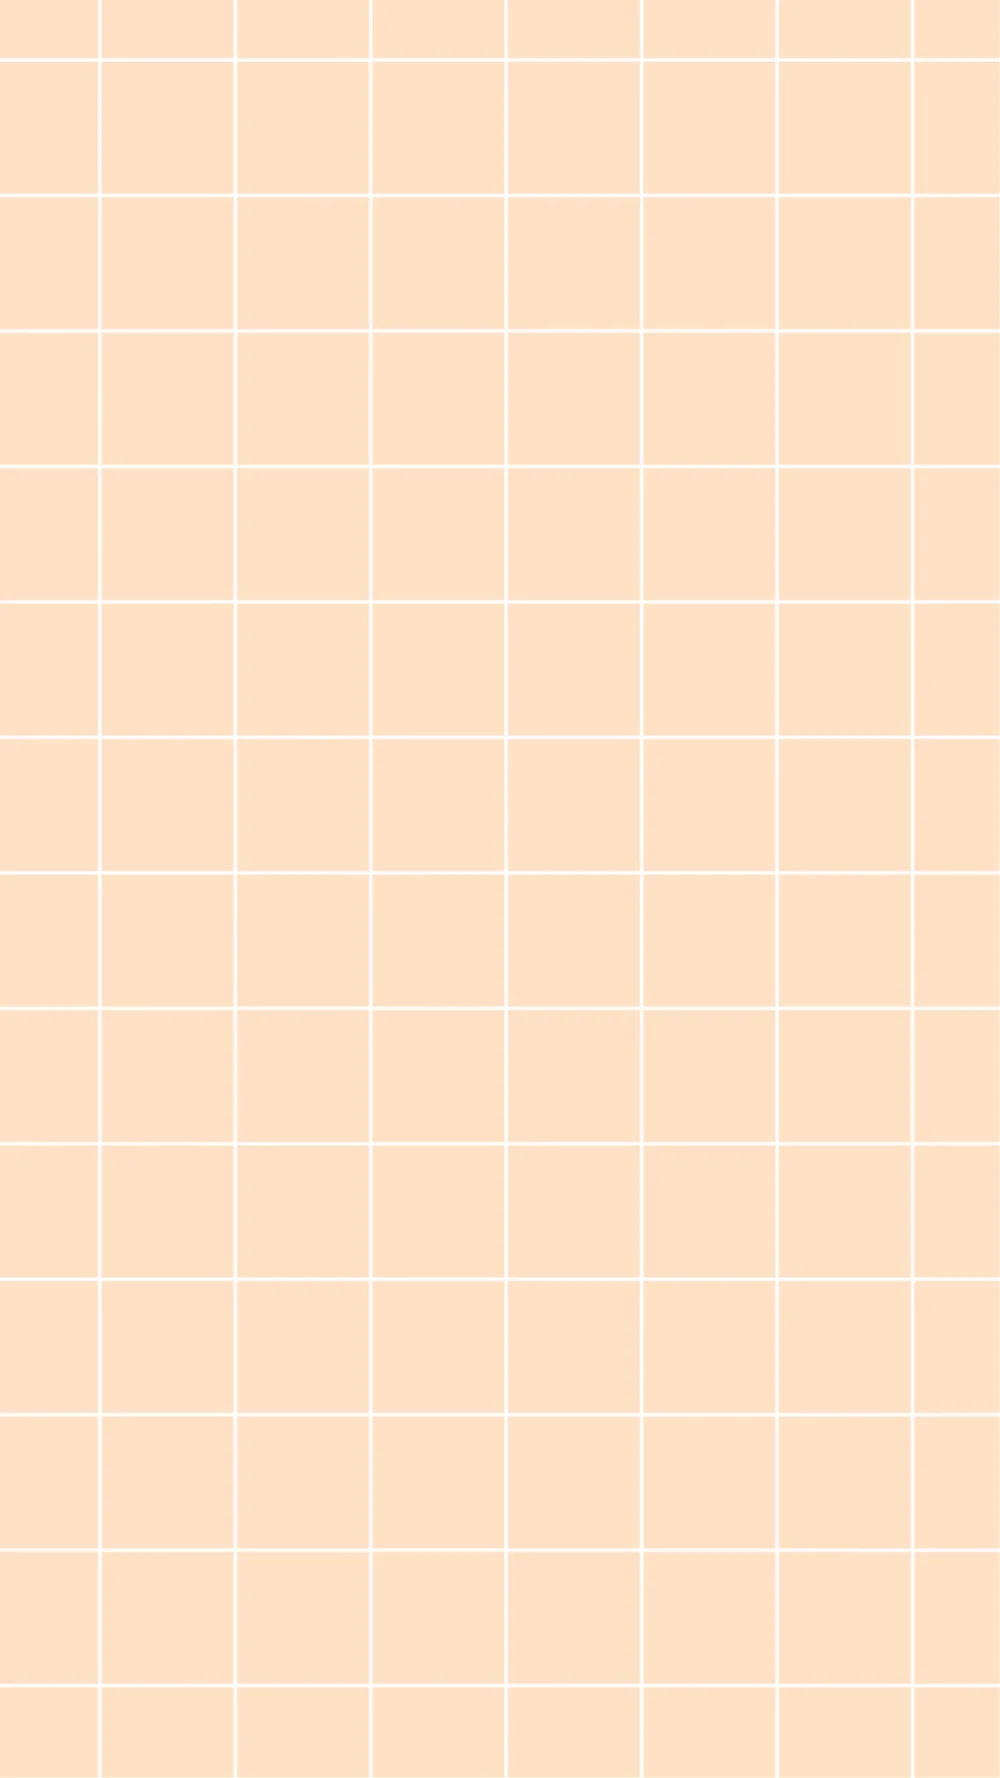 #grid #aesthetic #orangegrid #gridwallpaper